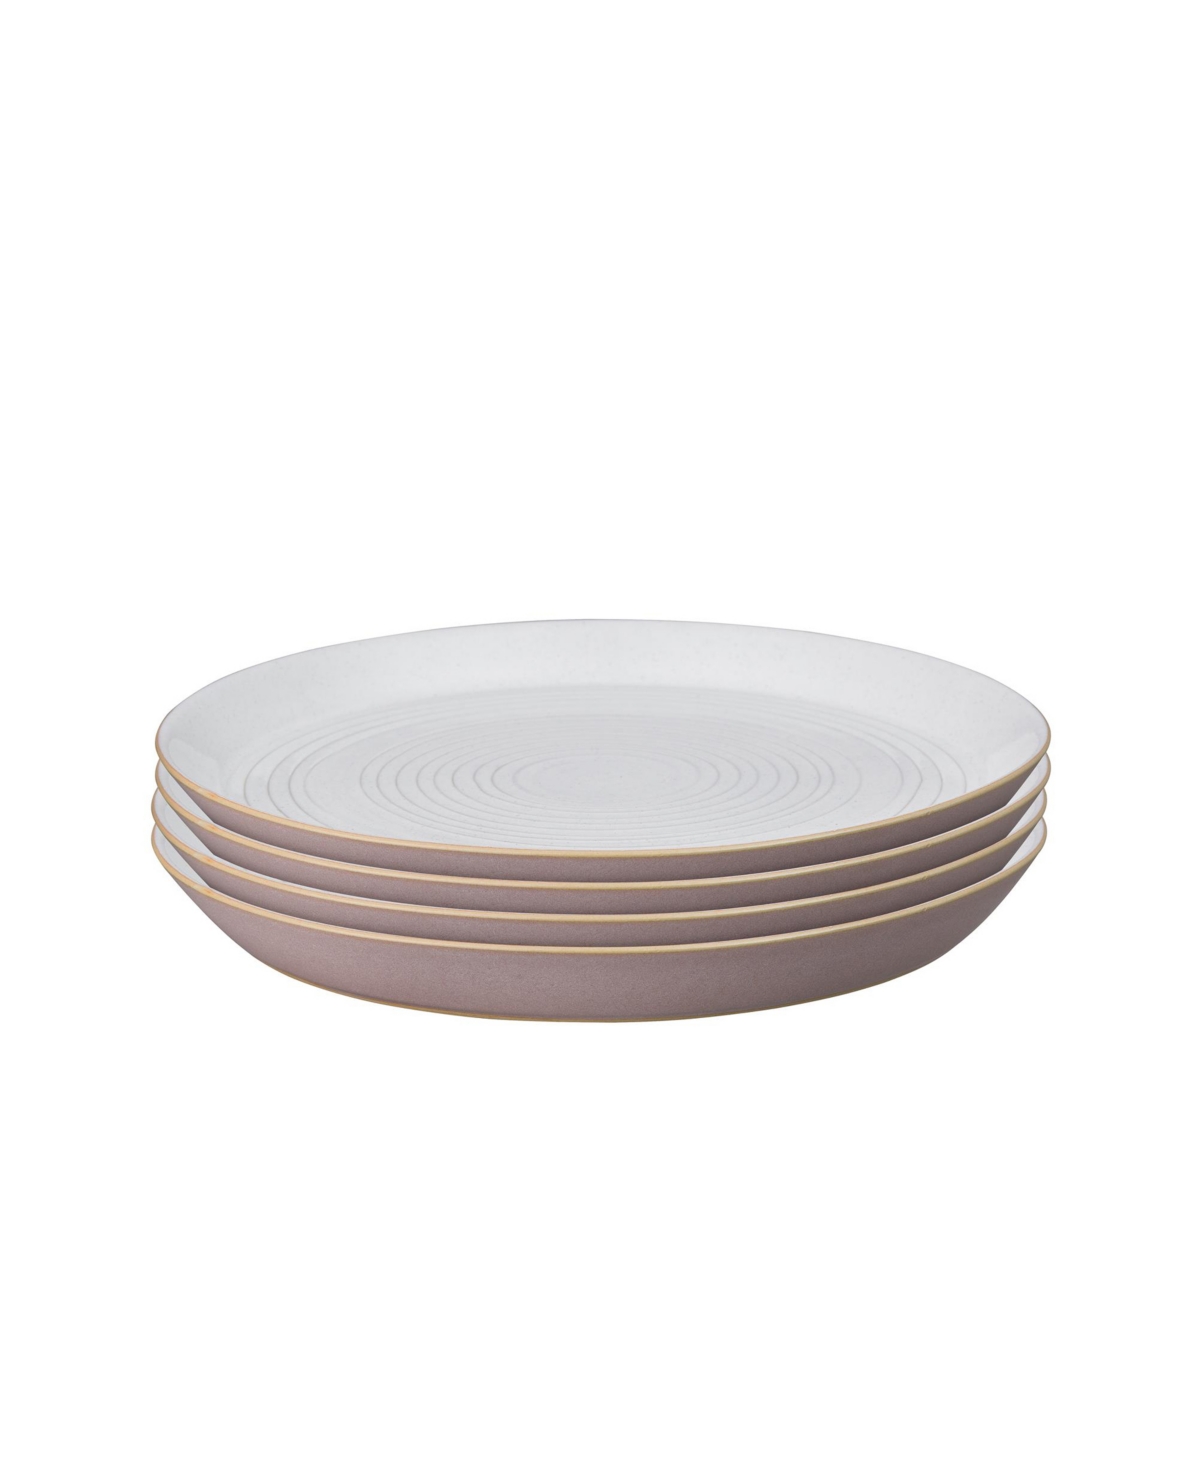 Impression Pink Medium Plate, Set of 4 - Medium Pink